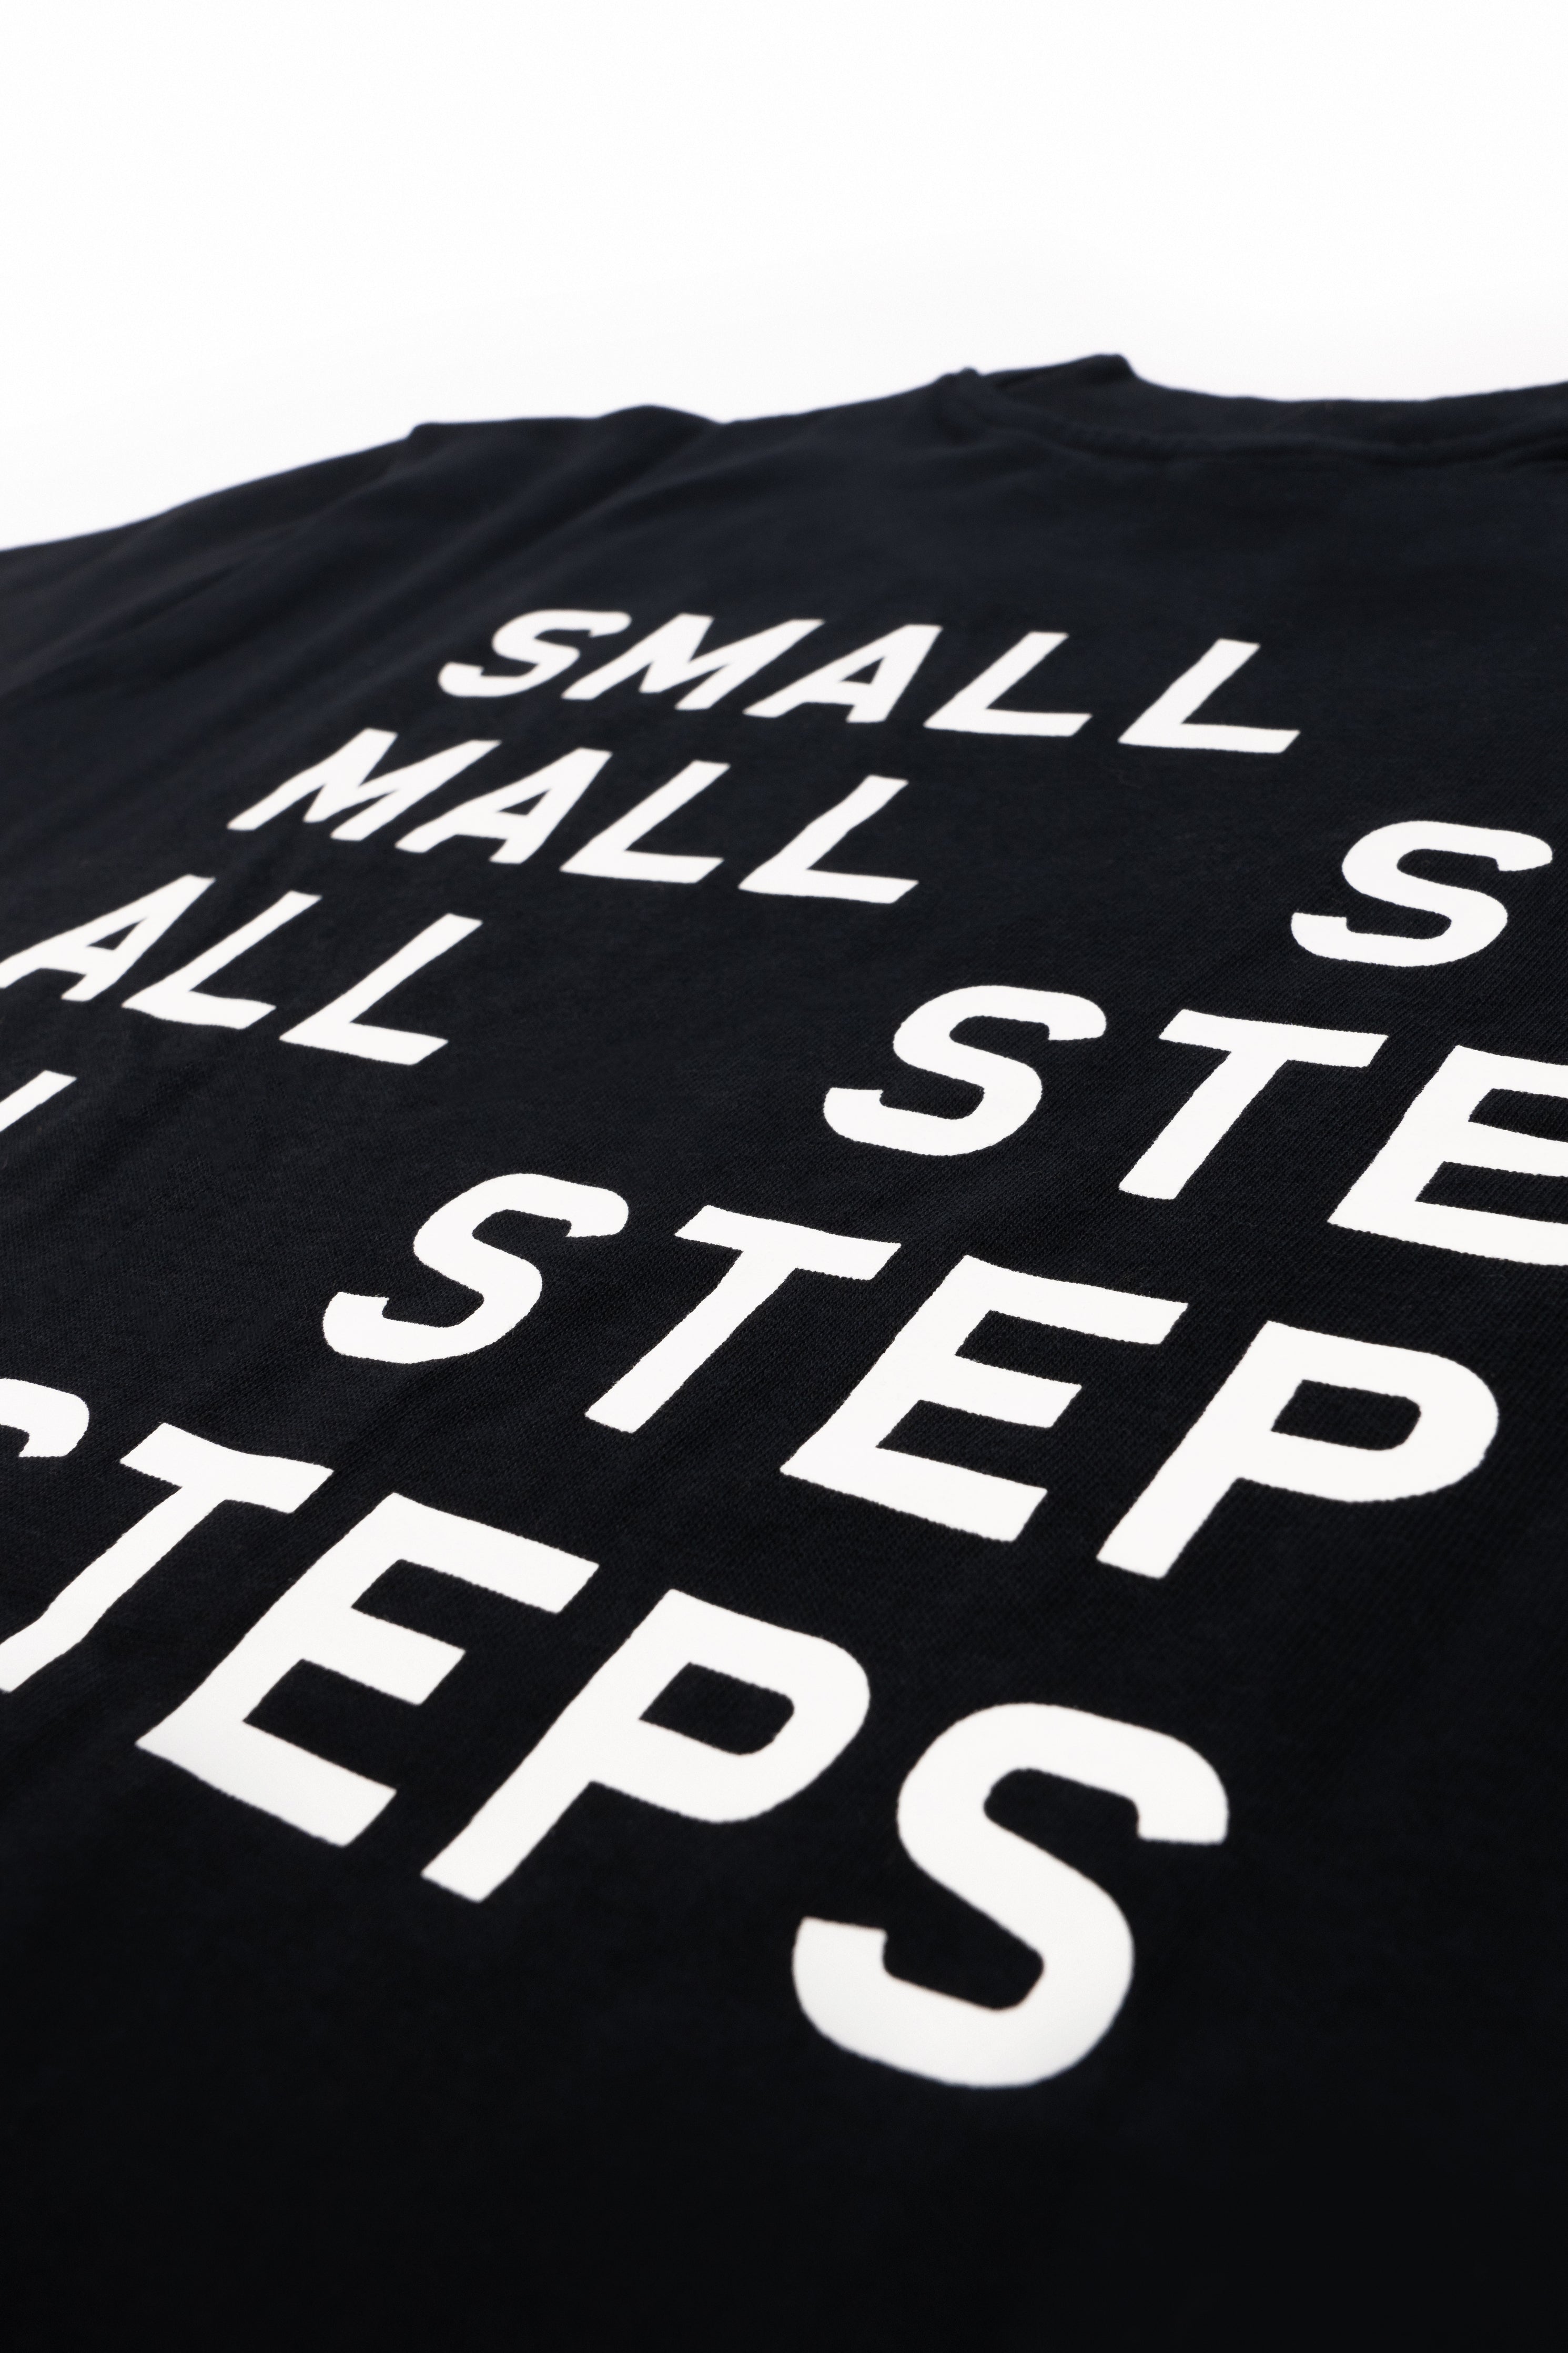 Small Steps Eco T-Shirt